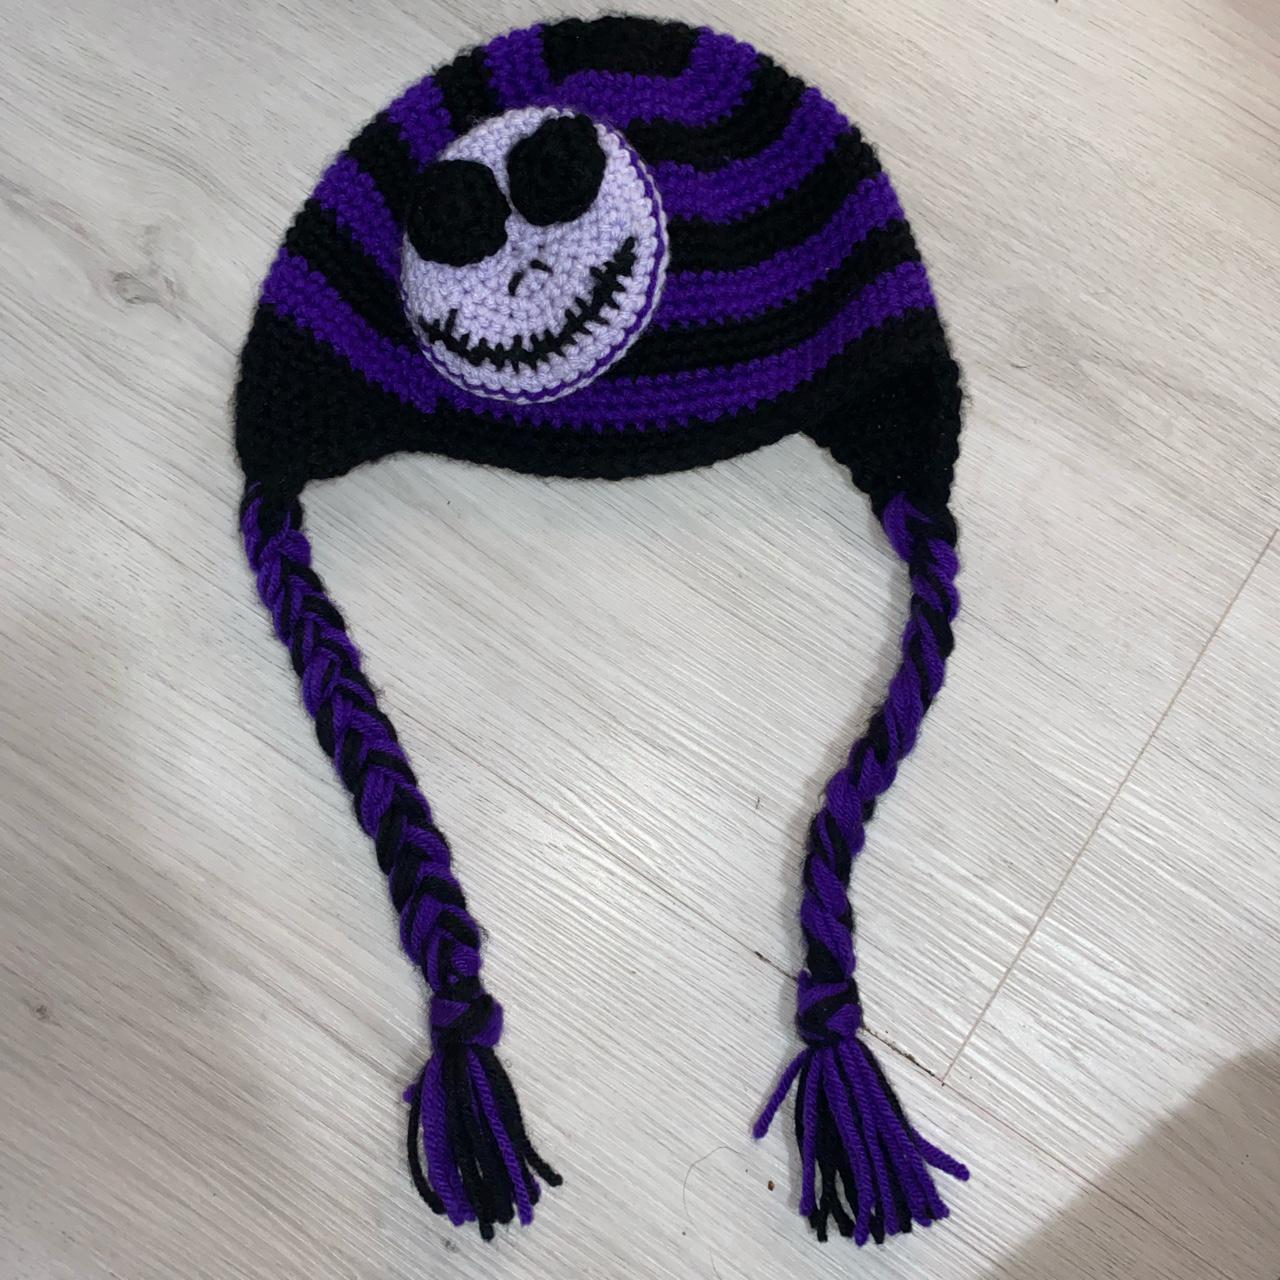 Product Image 1 - Jack Skellington crochet hat 
I’m